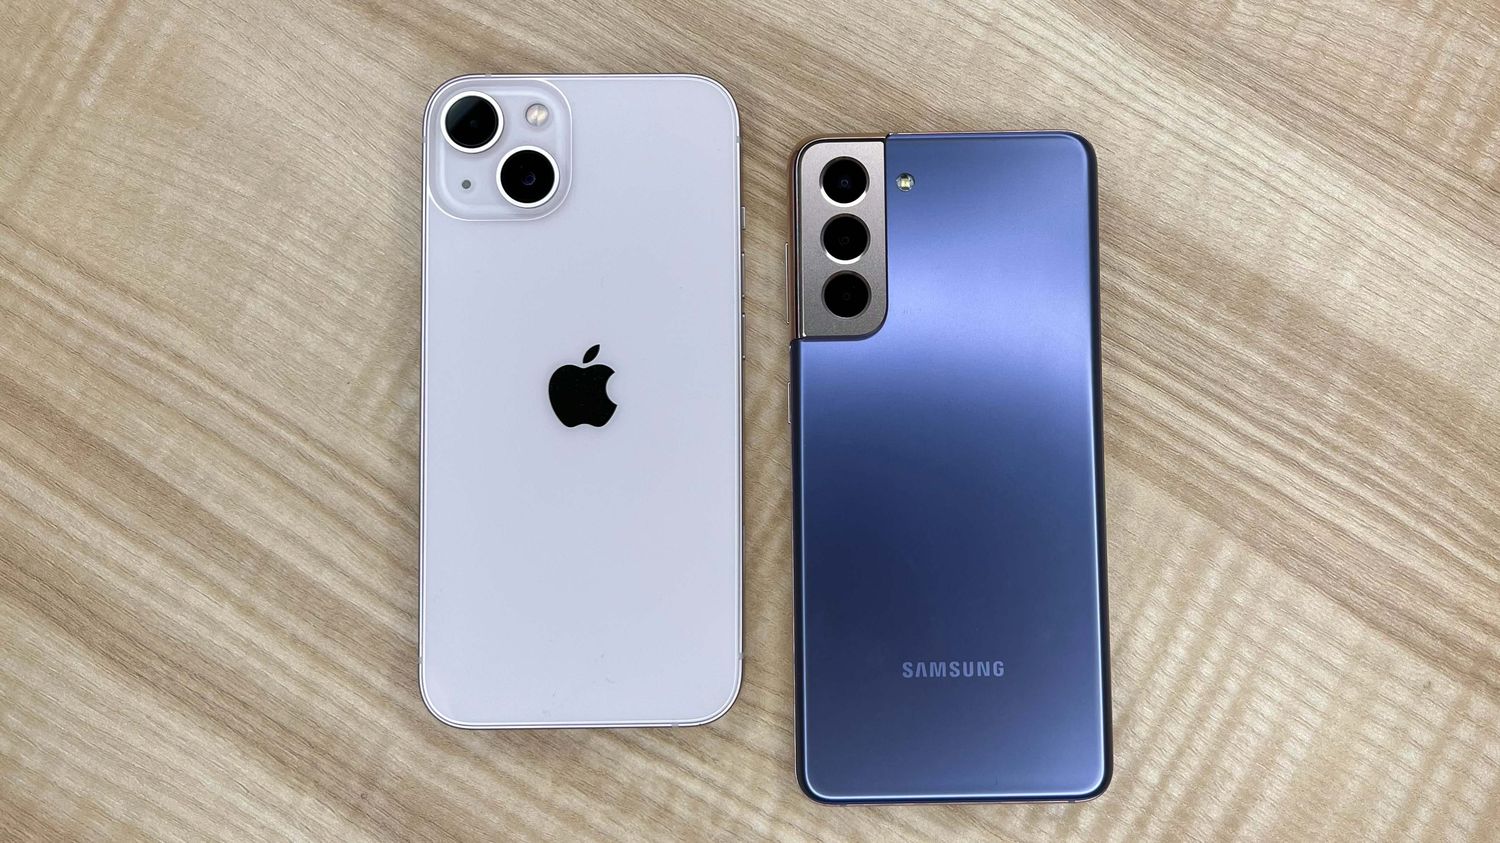 apple-iphone-13-vs-samsung-galaxy-s21-fe